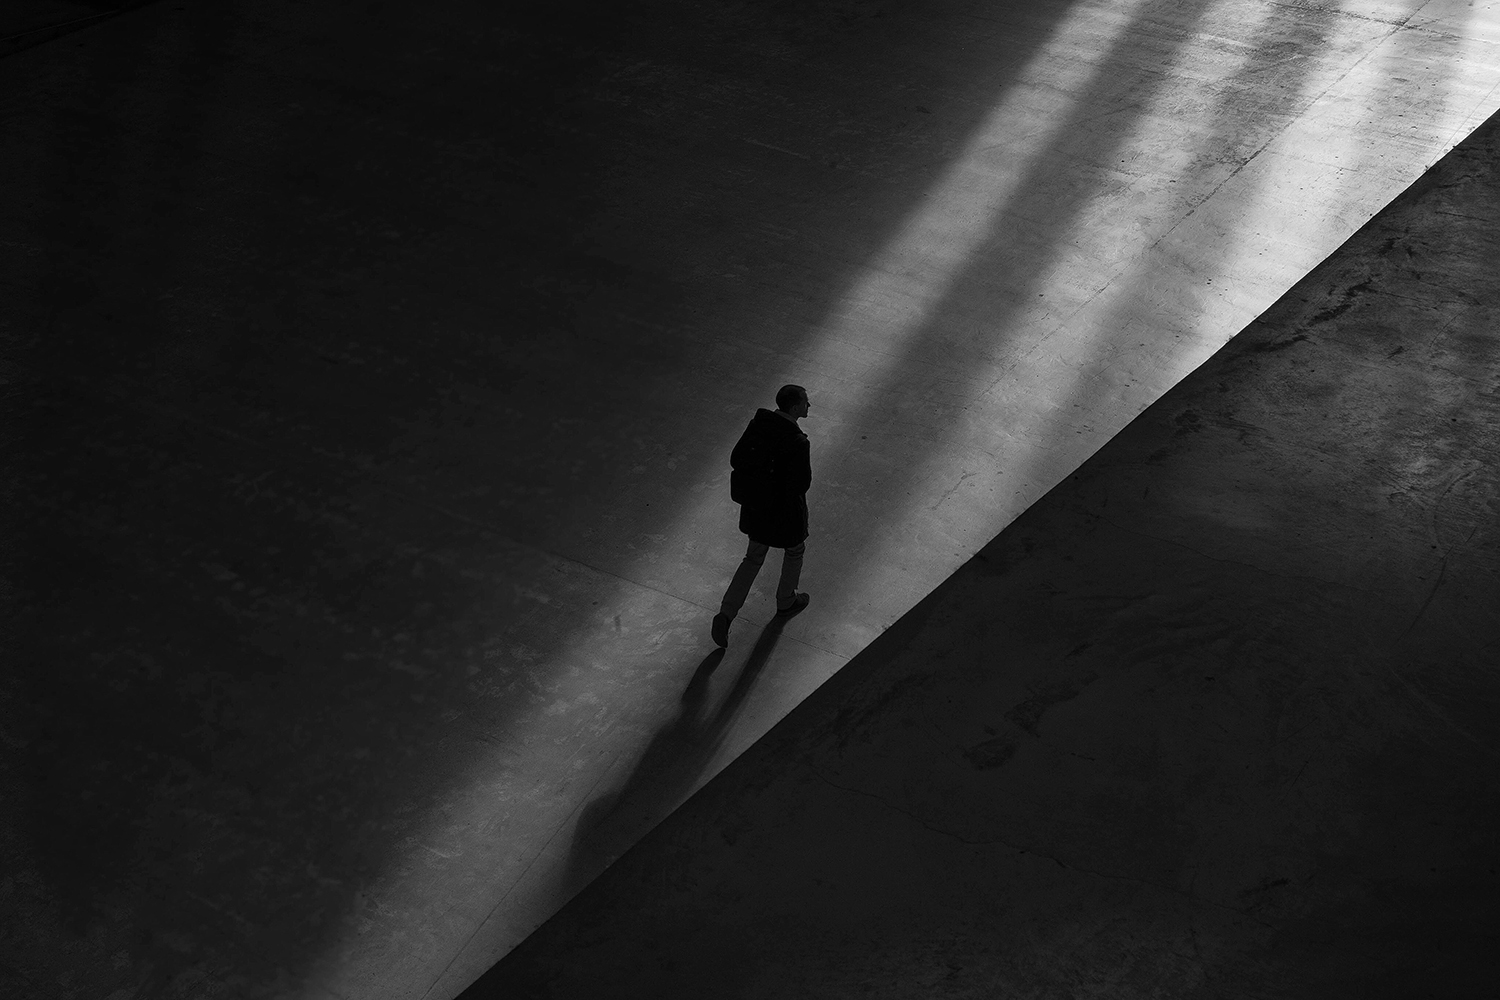 A man walking alone with shadows